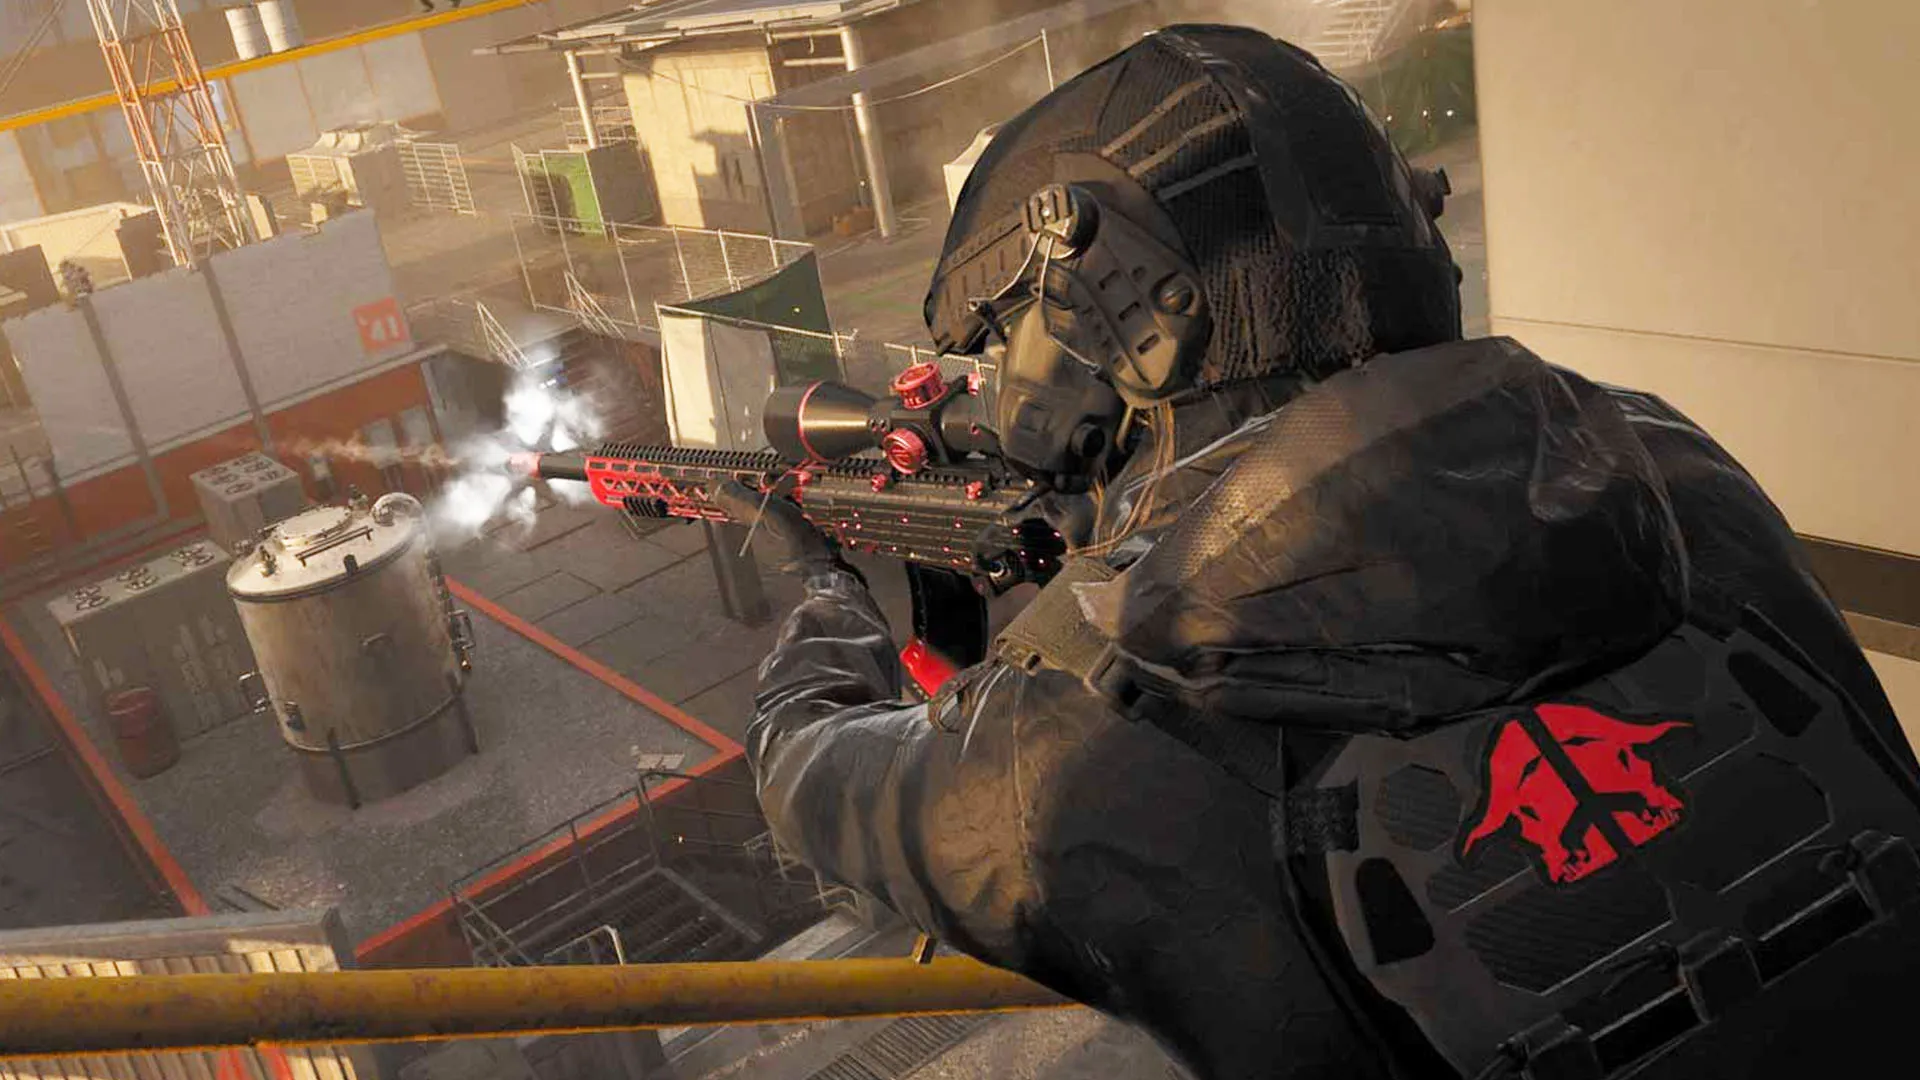 COD Leaks: Everything we know so far about CoD Modern Warfare 2